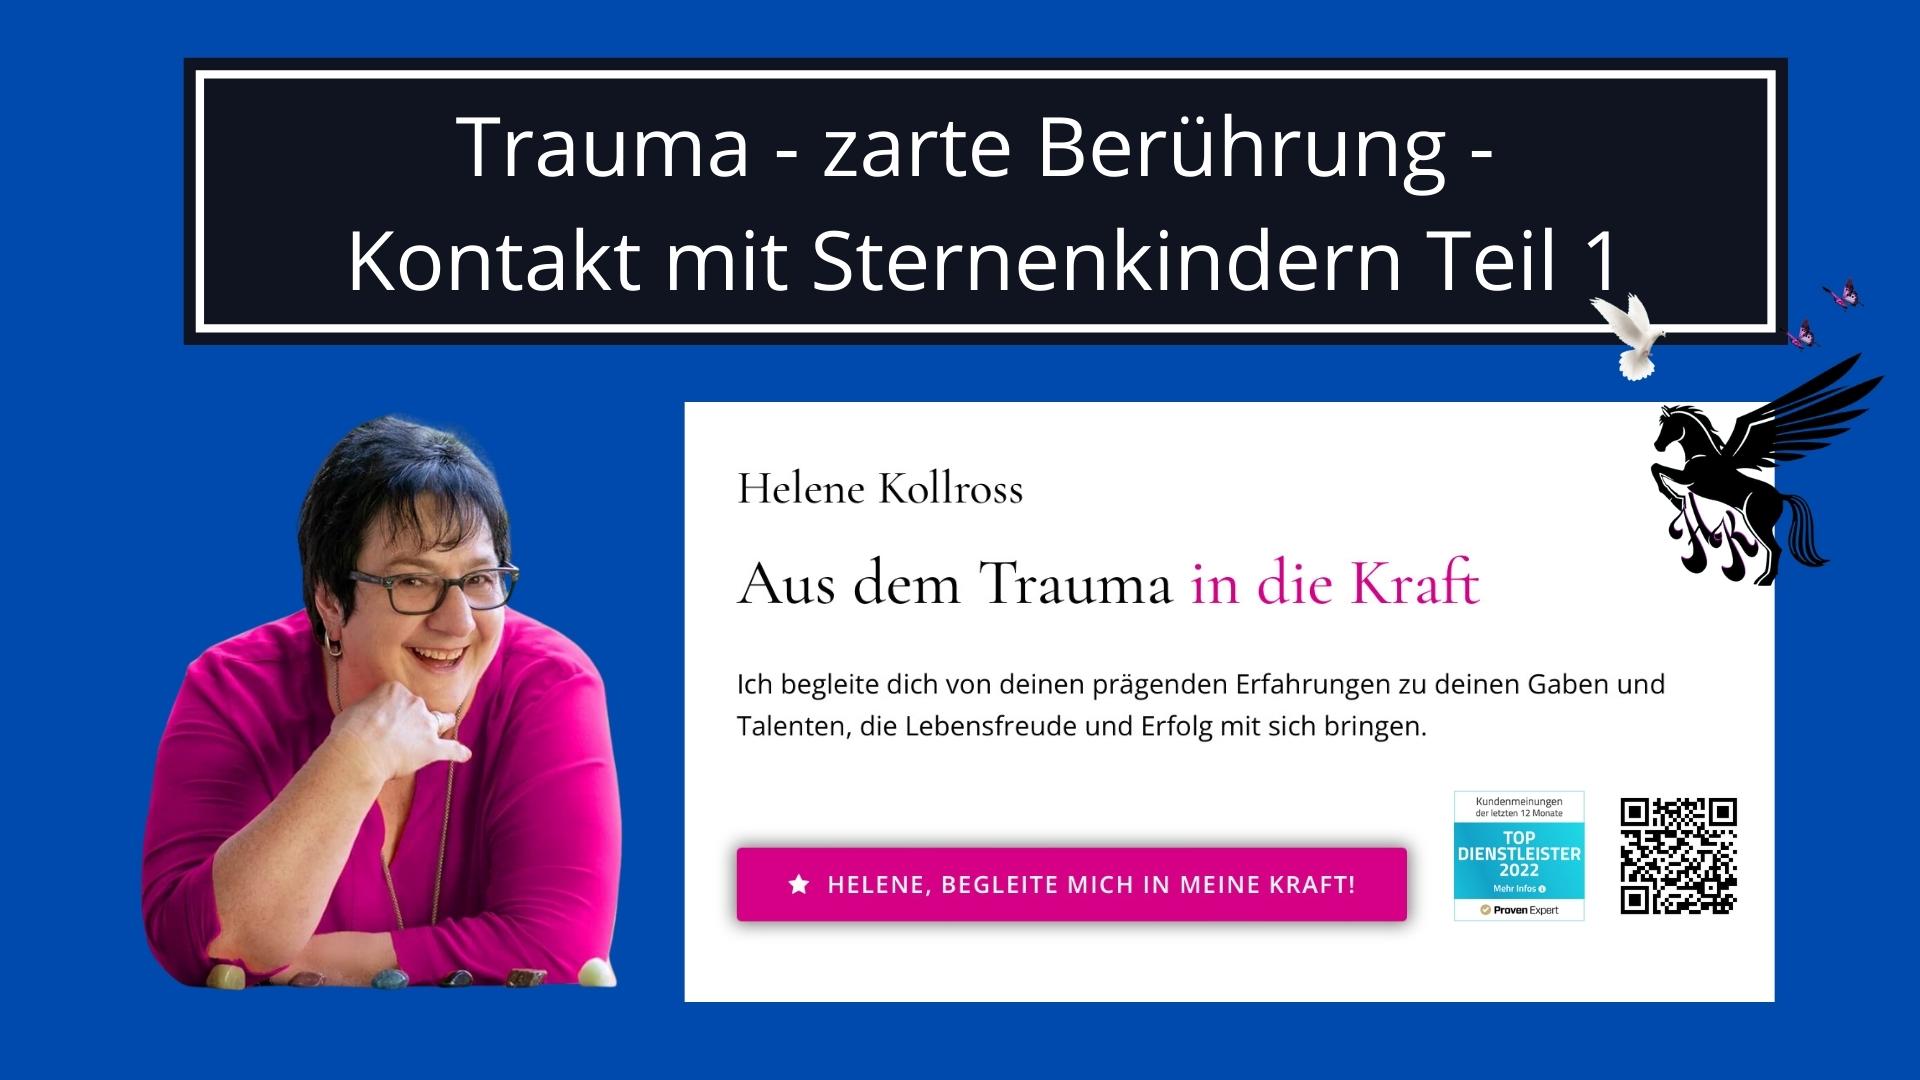 Trauma - zarte Berührung - Kontakt mit Sternenkindern Teil 1 Trauma & Mindset Mentor - Coach Repair Energetics Kollross Helene